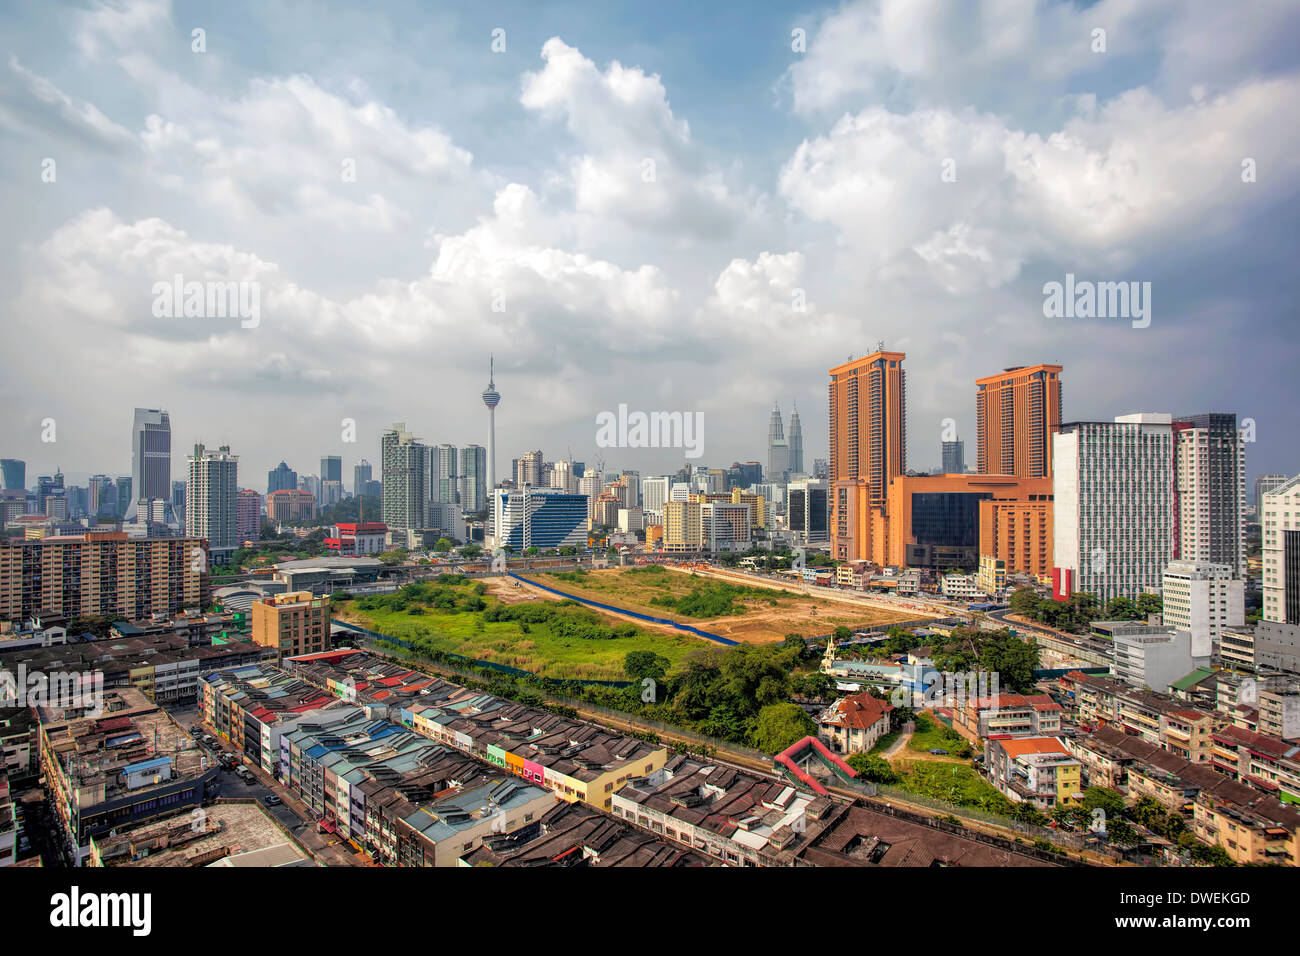 Kuala Lumpur Malaysia Central Cityscape with Old Neighborhood Houses Against Cloudy Blue Sky Stock Photo